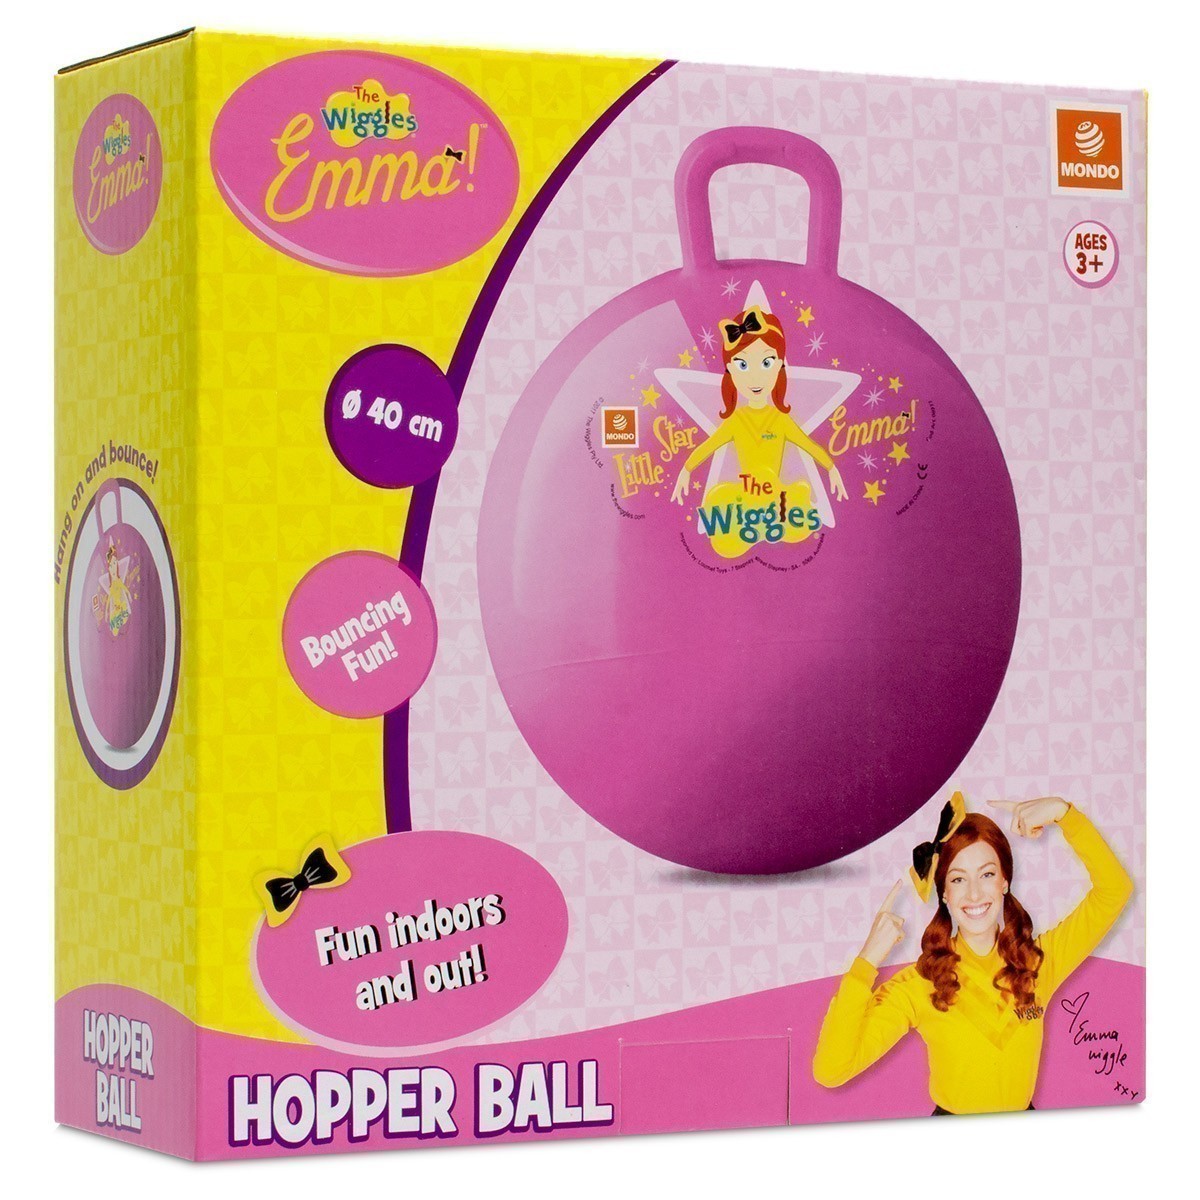 Hopper Ball - The Wiggles - Emma